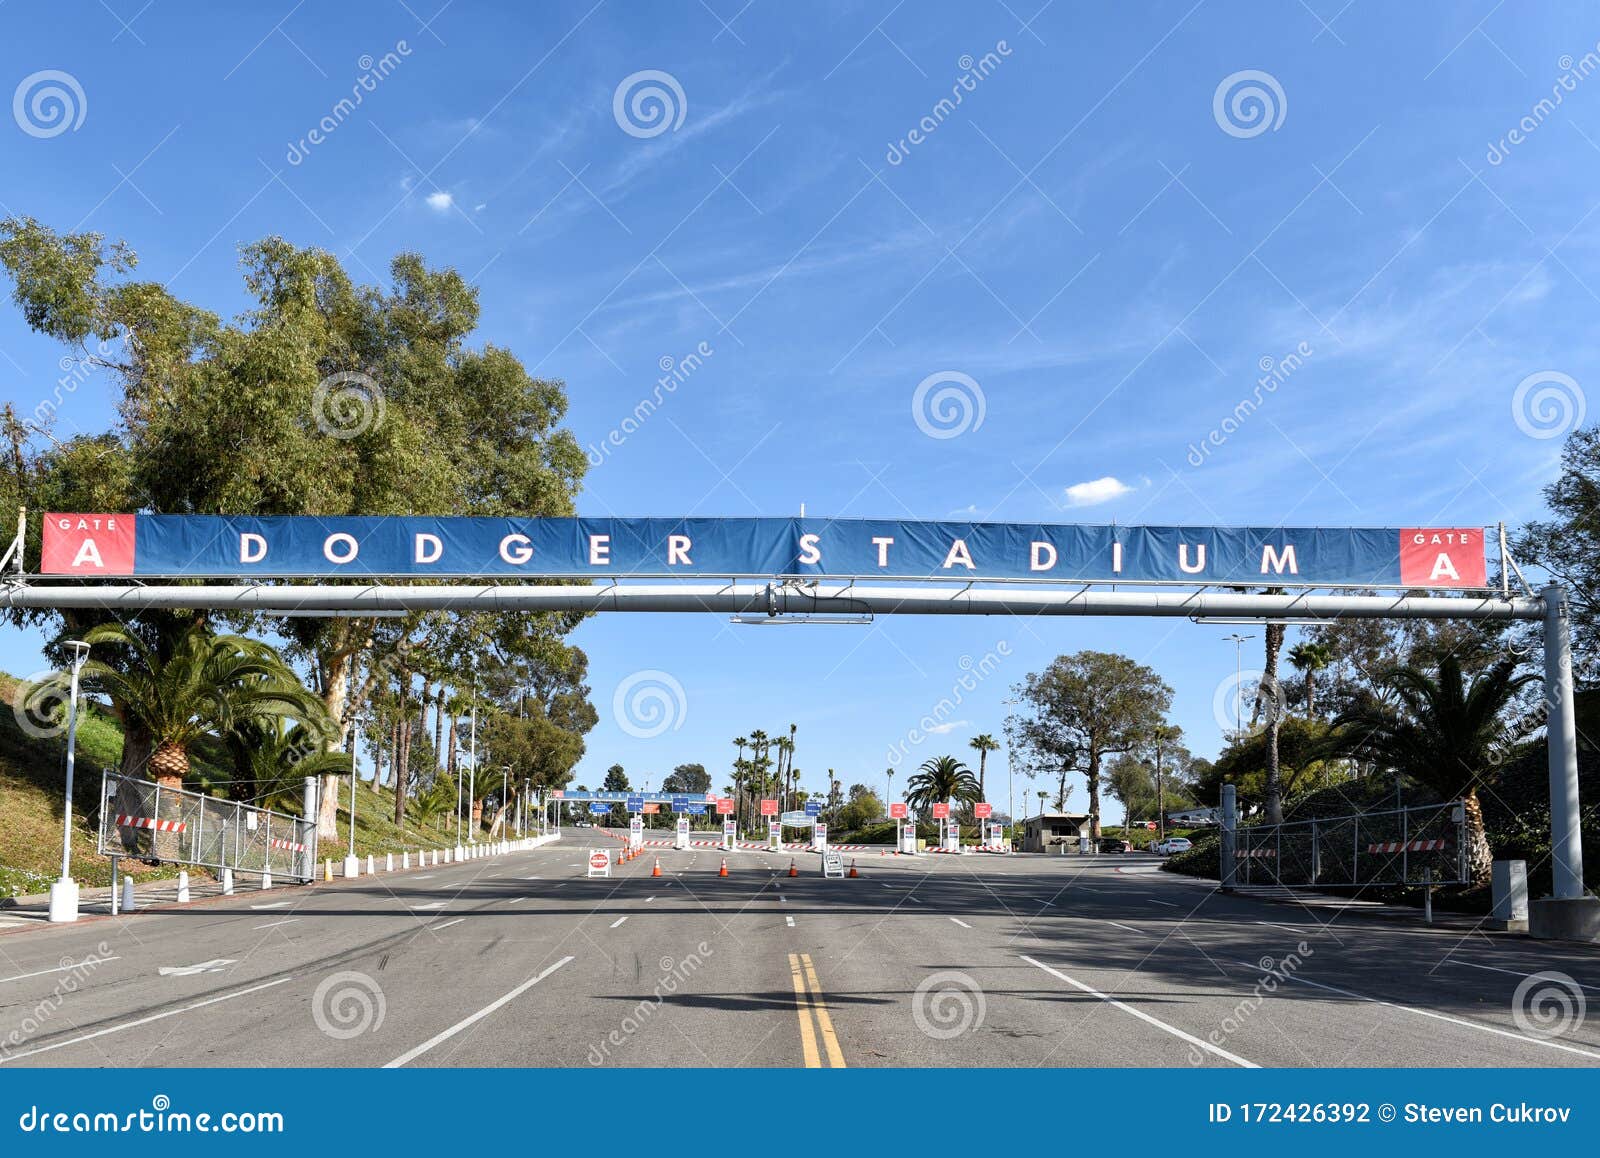 Los Angeles California 12 Feb 2020 Dodger Stadium Sign At Vin